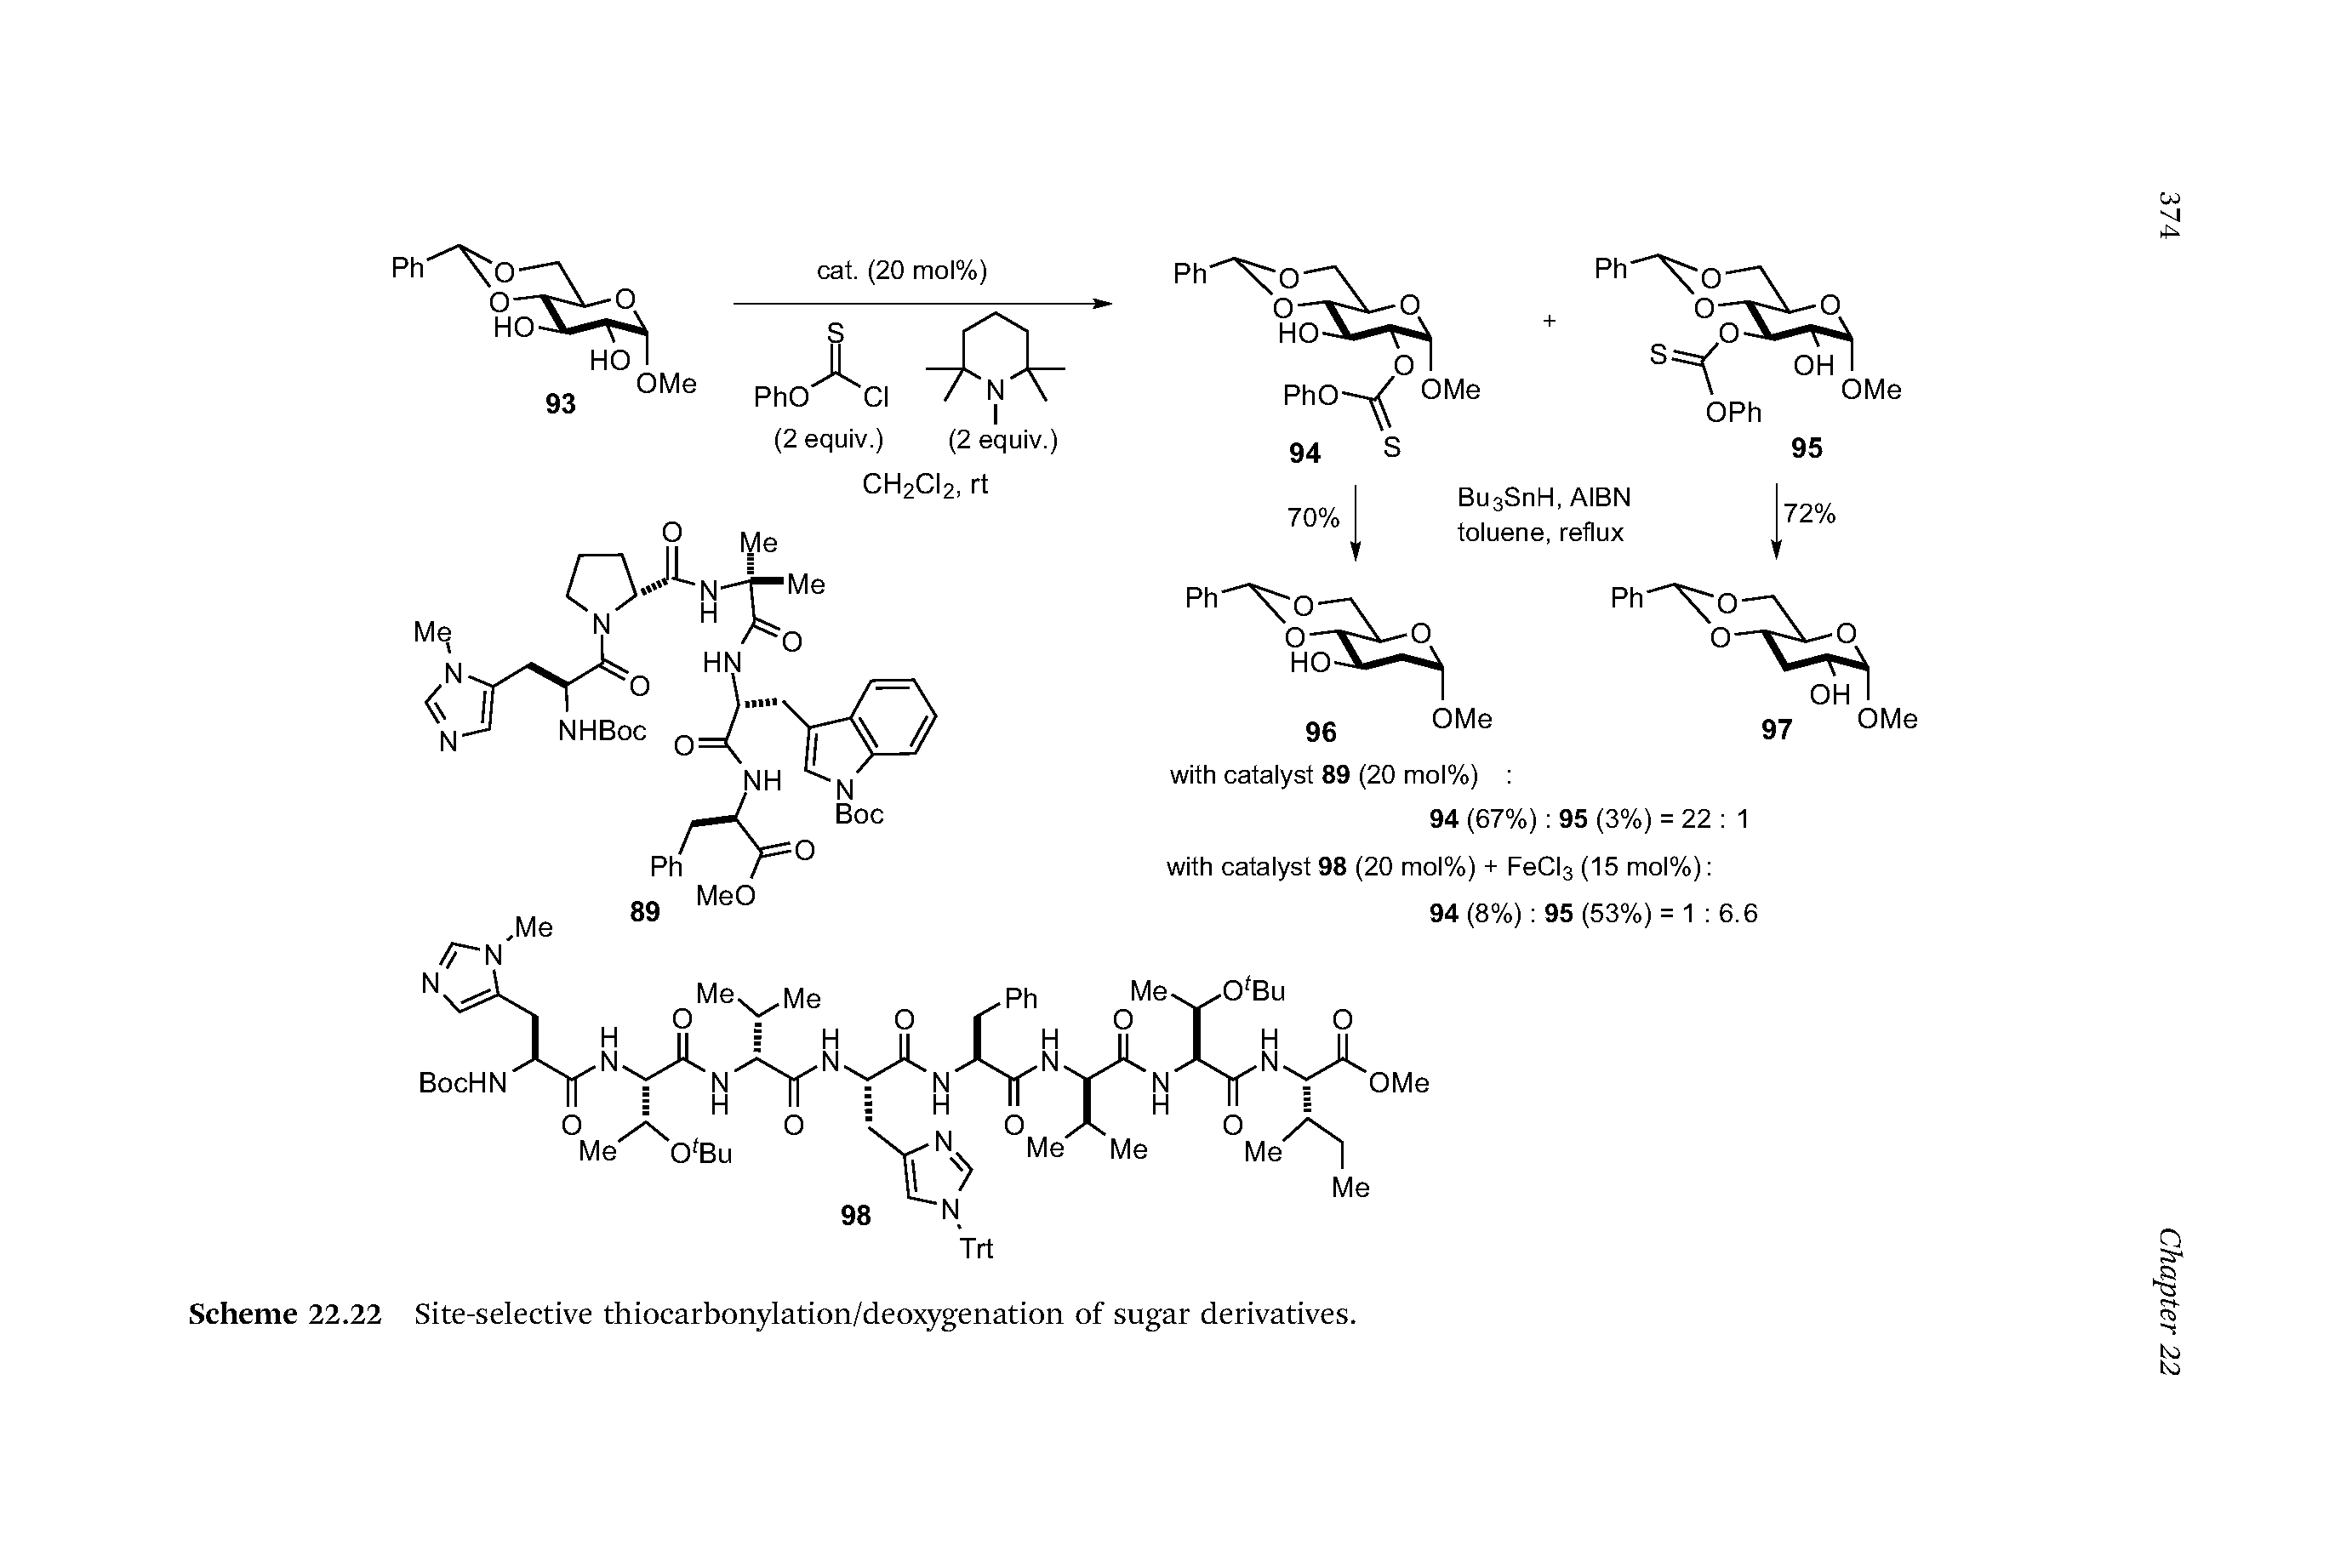 Scheme 22.22 Site-selective thiocarbonylation/deoxygenation of sugar derivatives.